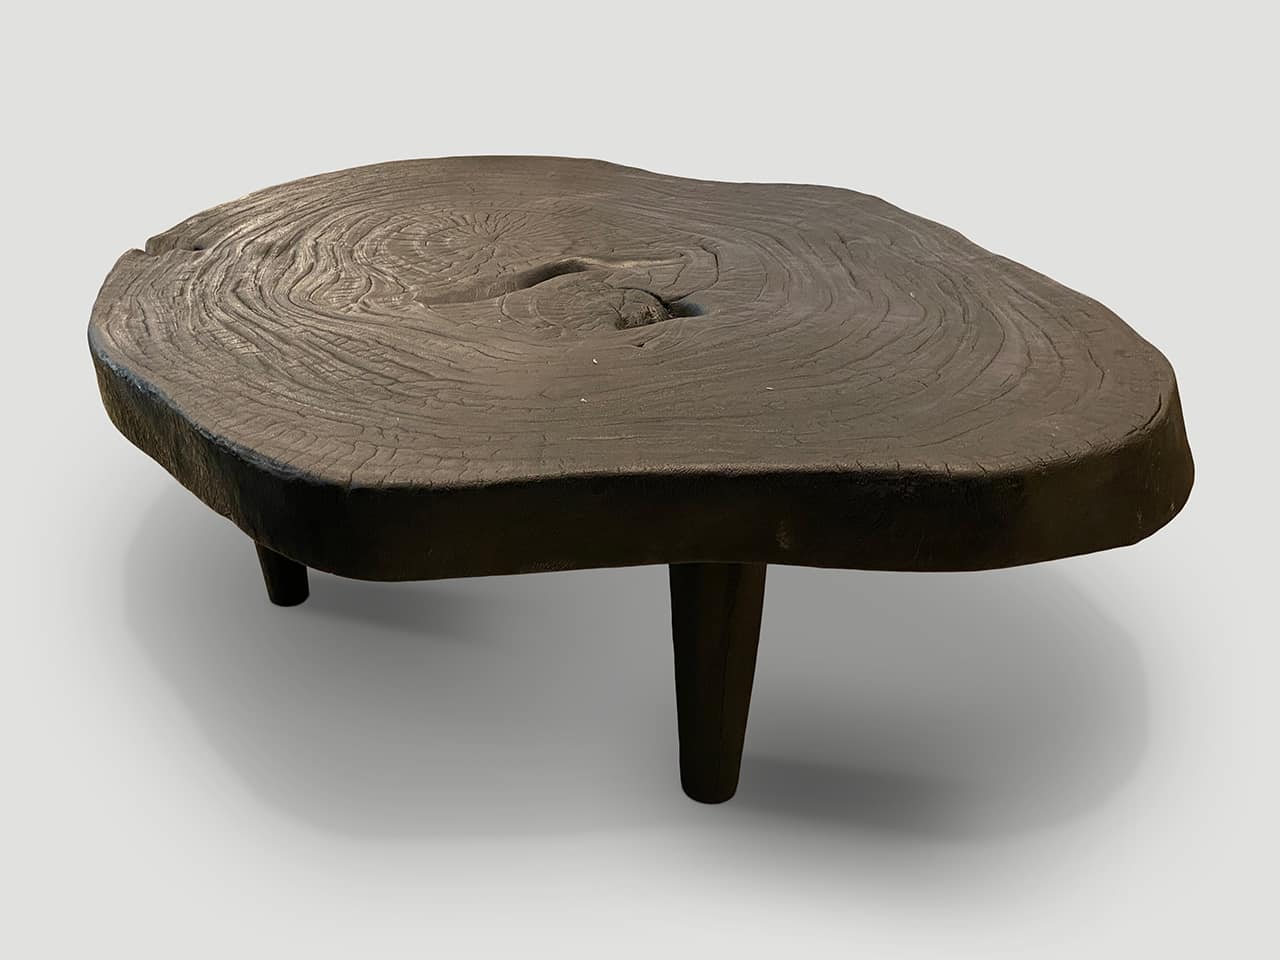 single slab coffee table, set on cone shaped mid century style legs